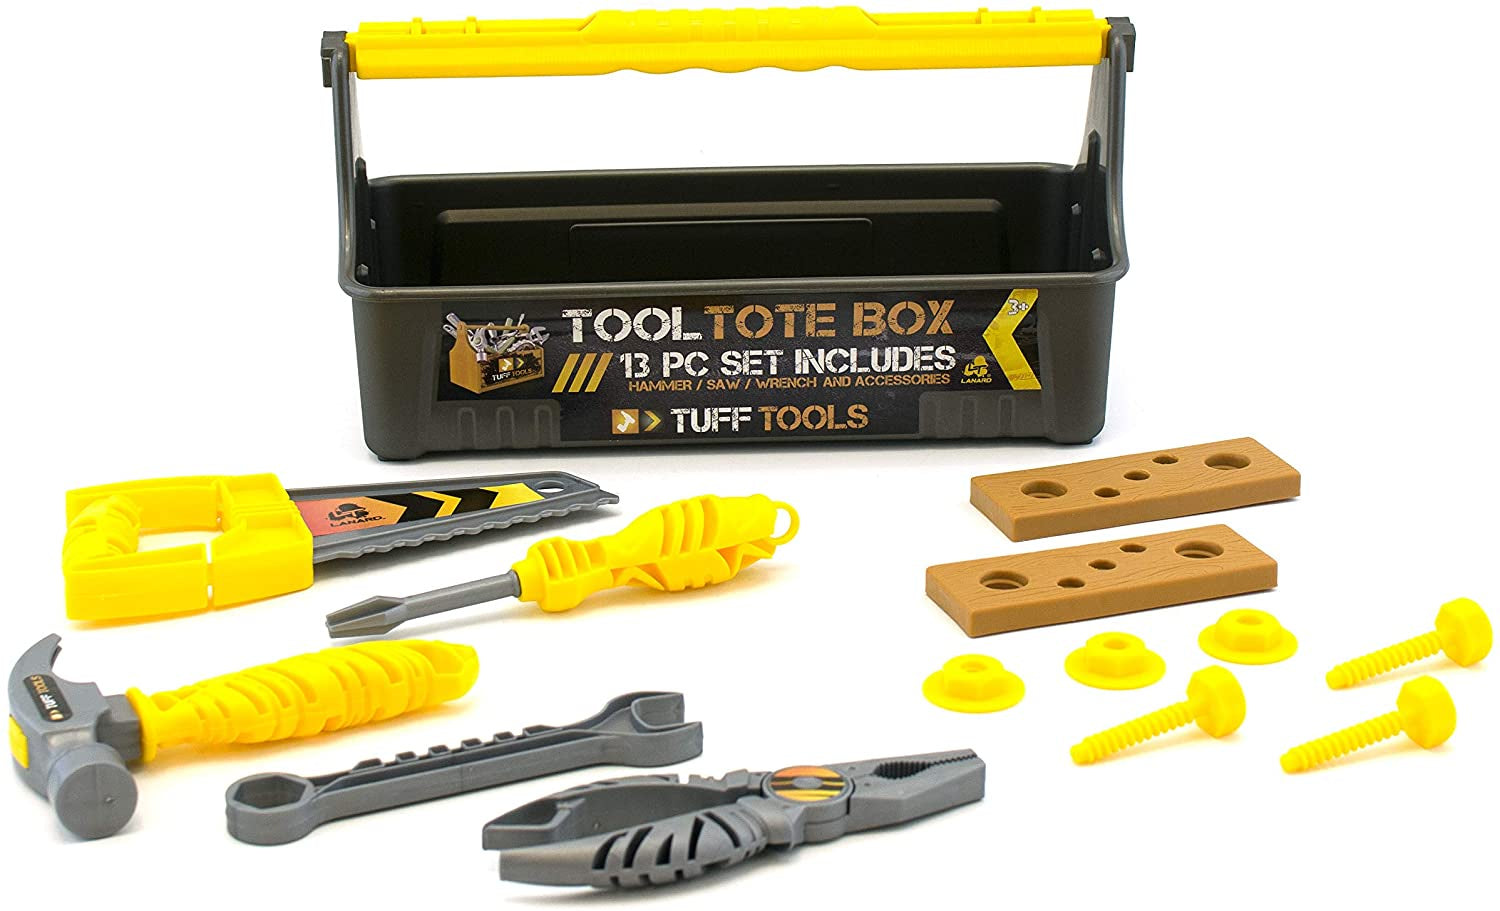 Tuff Tools Tote Box